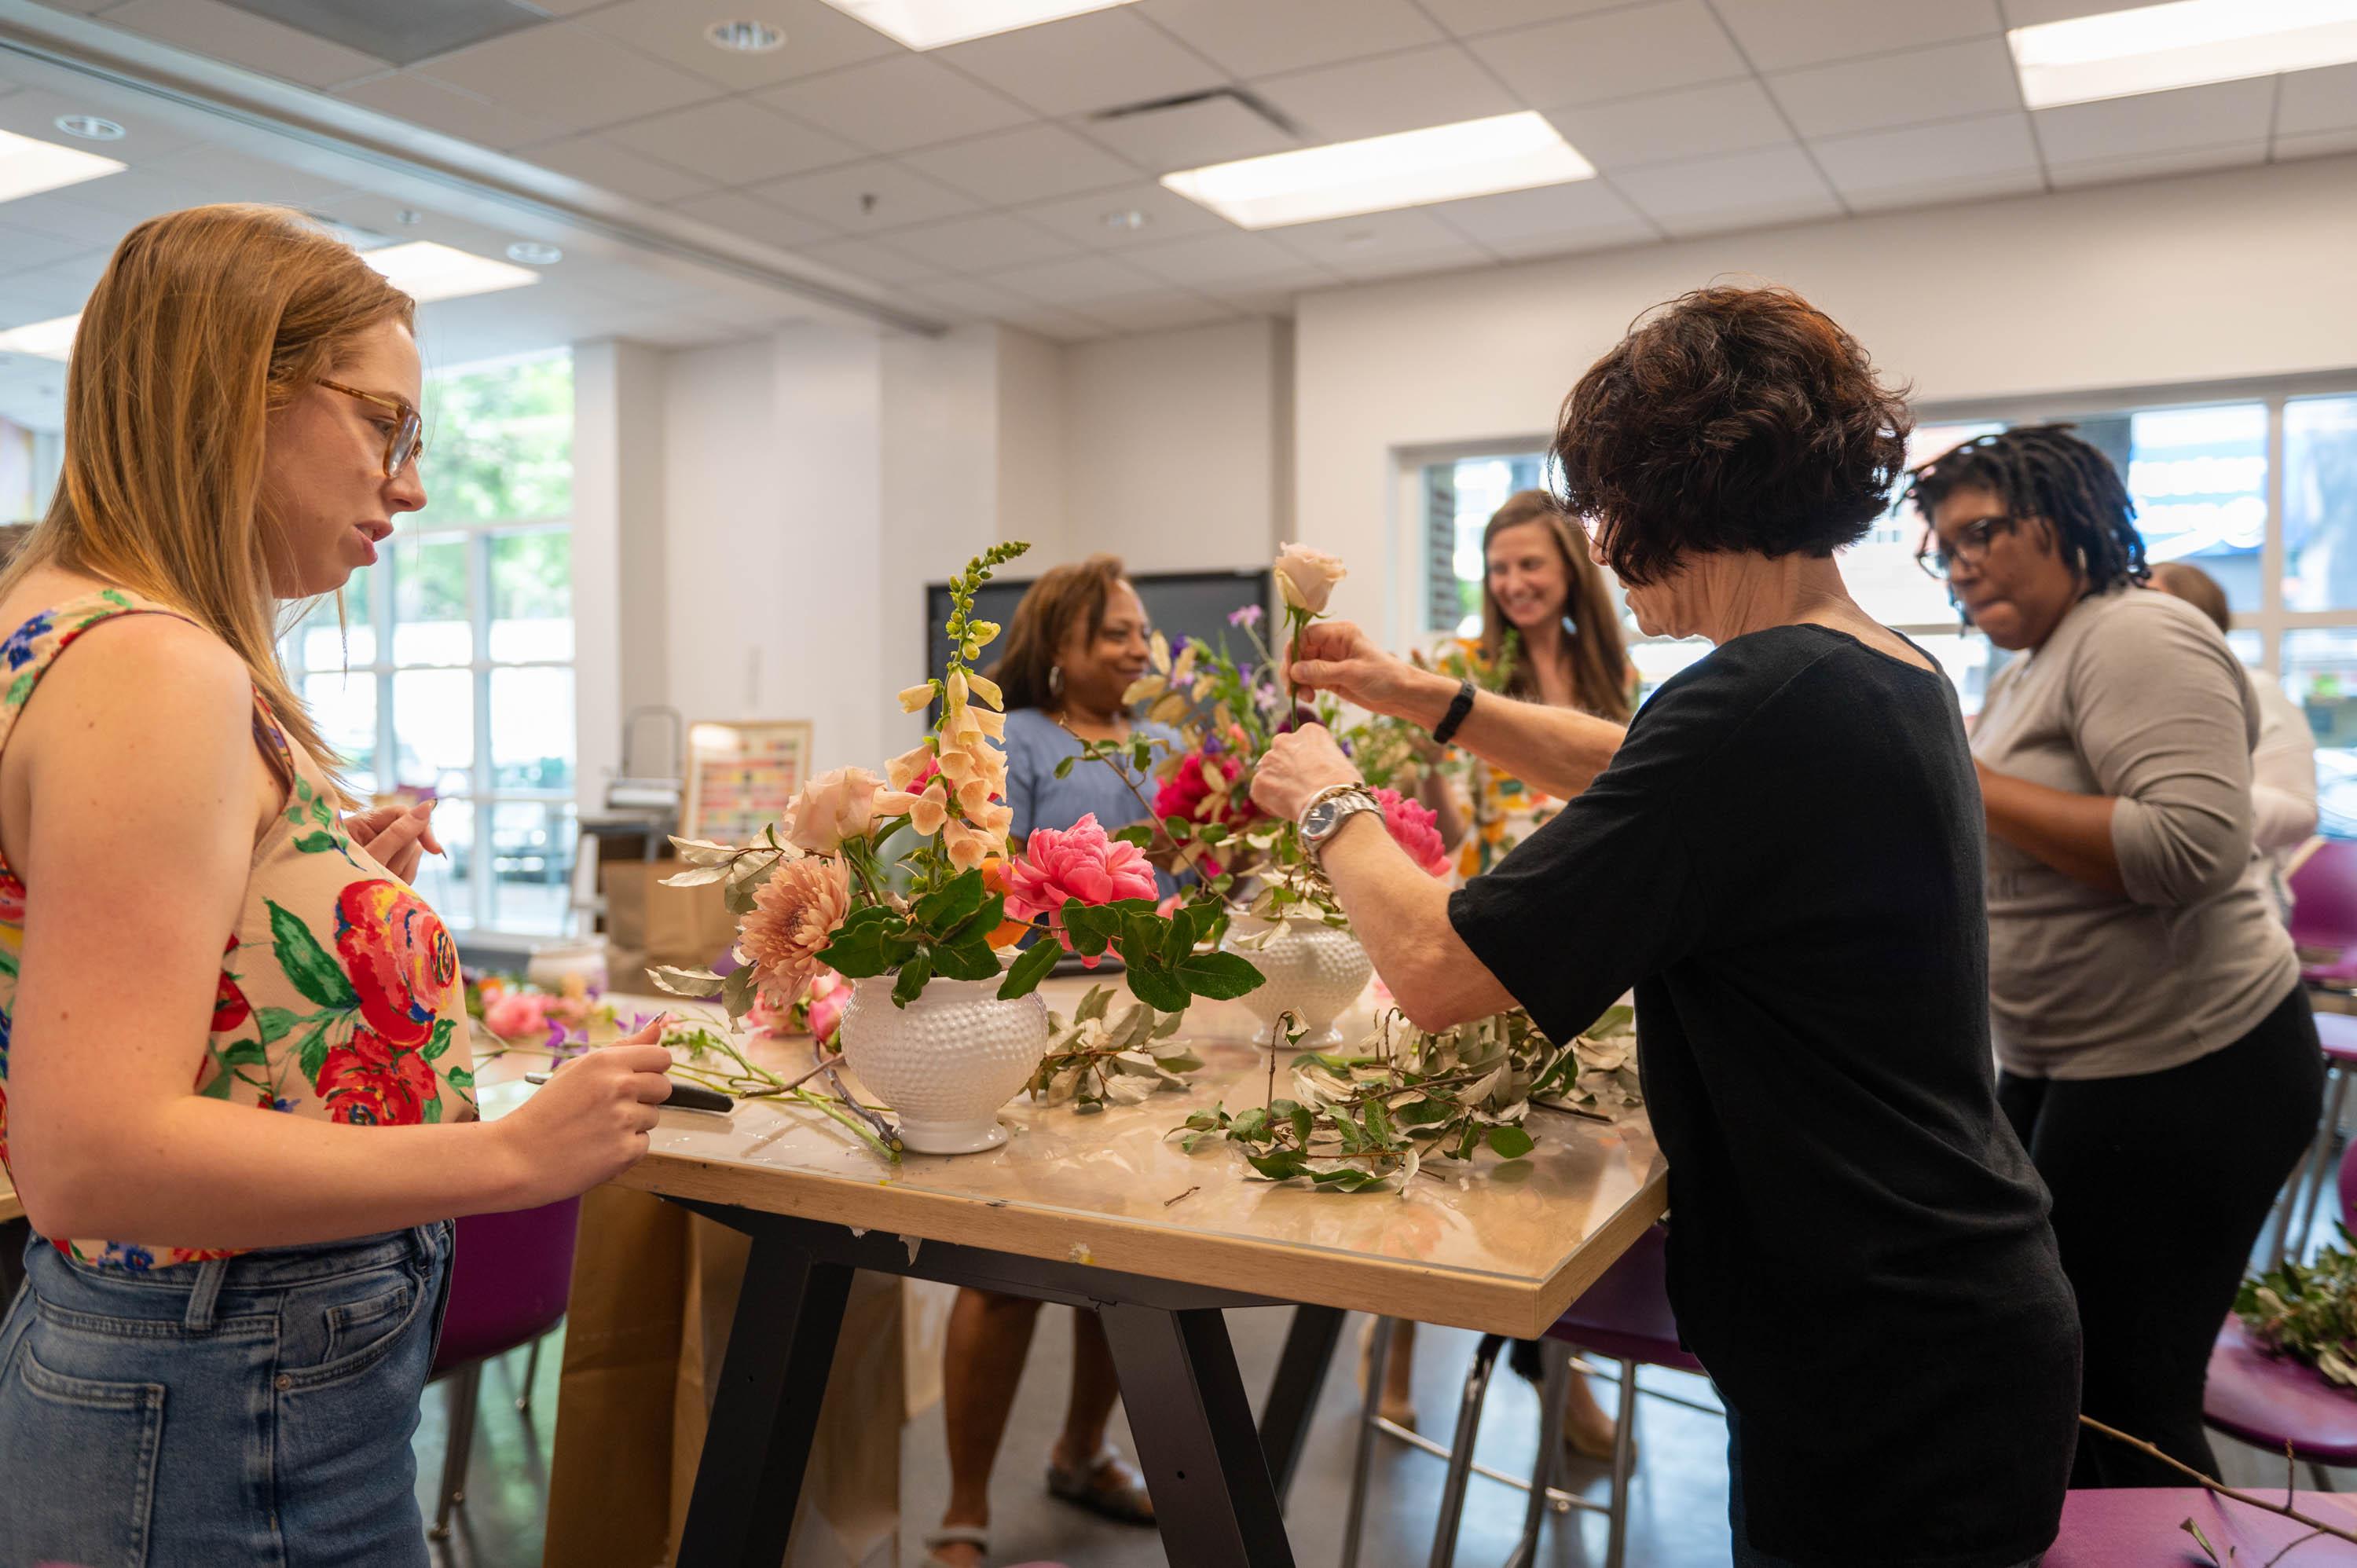 Group of diversed women working on floral design arrangements 